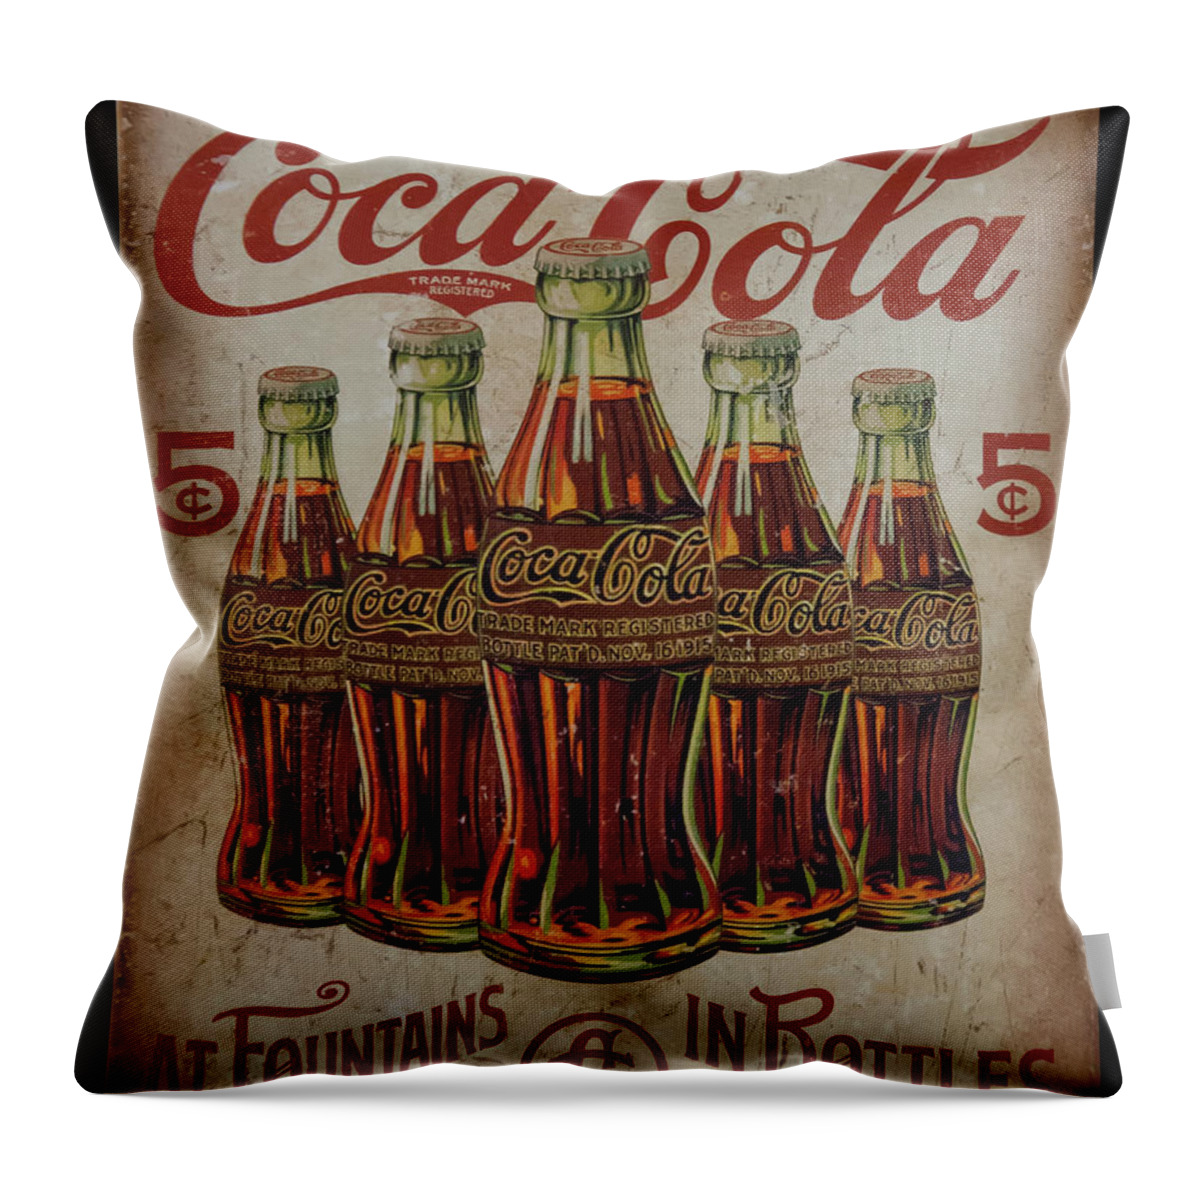 Coca Cola Throw Pillow featuring the photograph vintage Coca Cola sign by Flees Photos